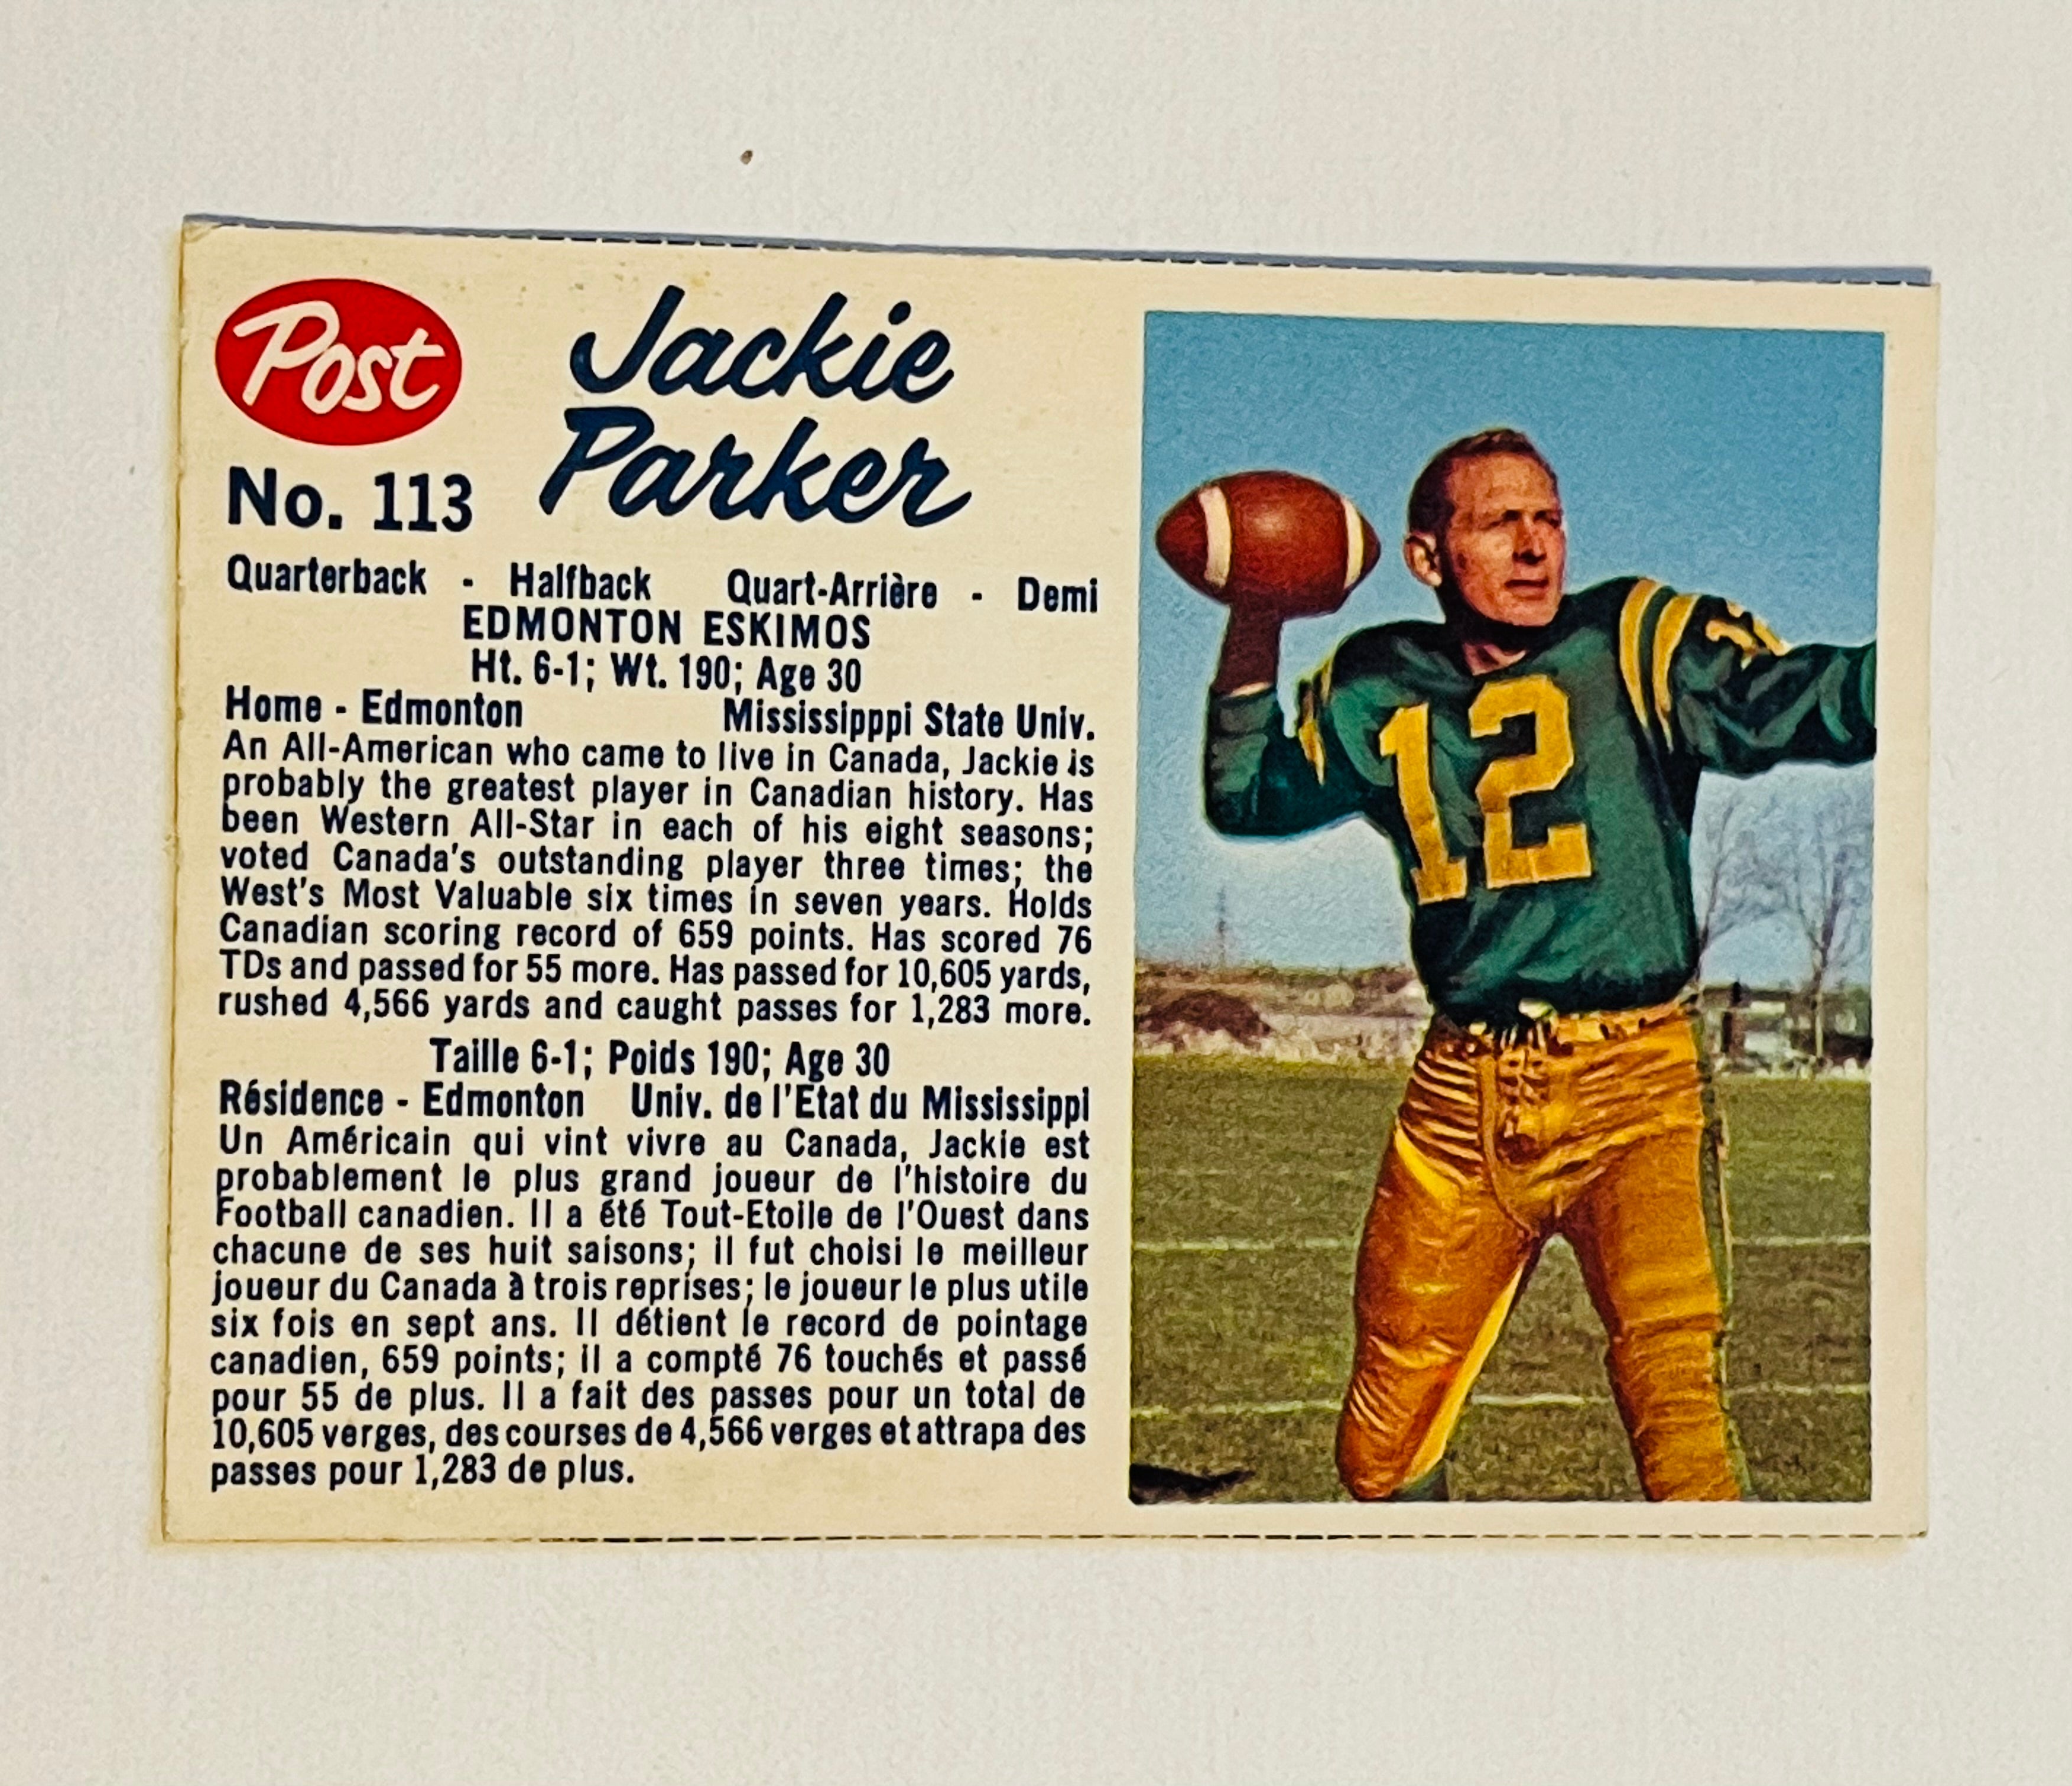 Jackie Parker Post cereal CFL football card 1962